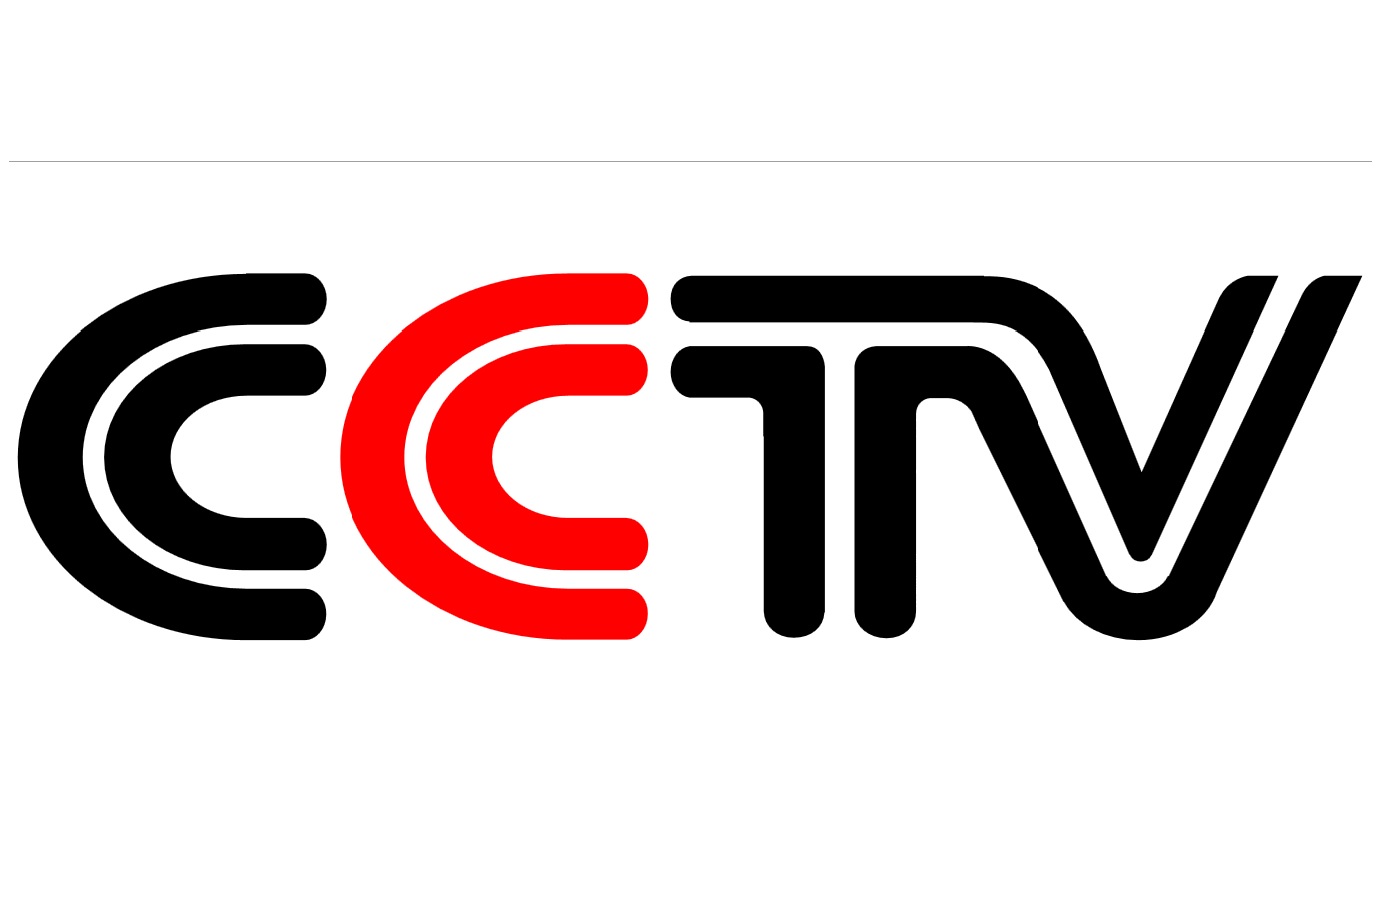 CCTV News China